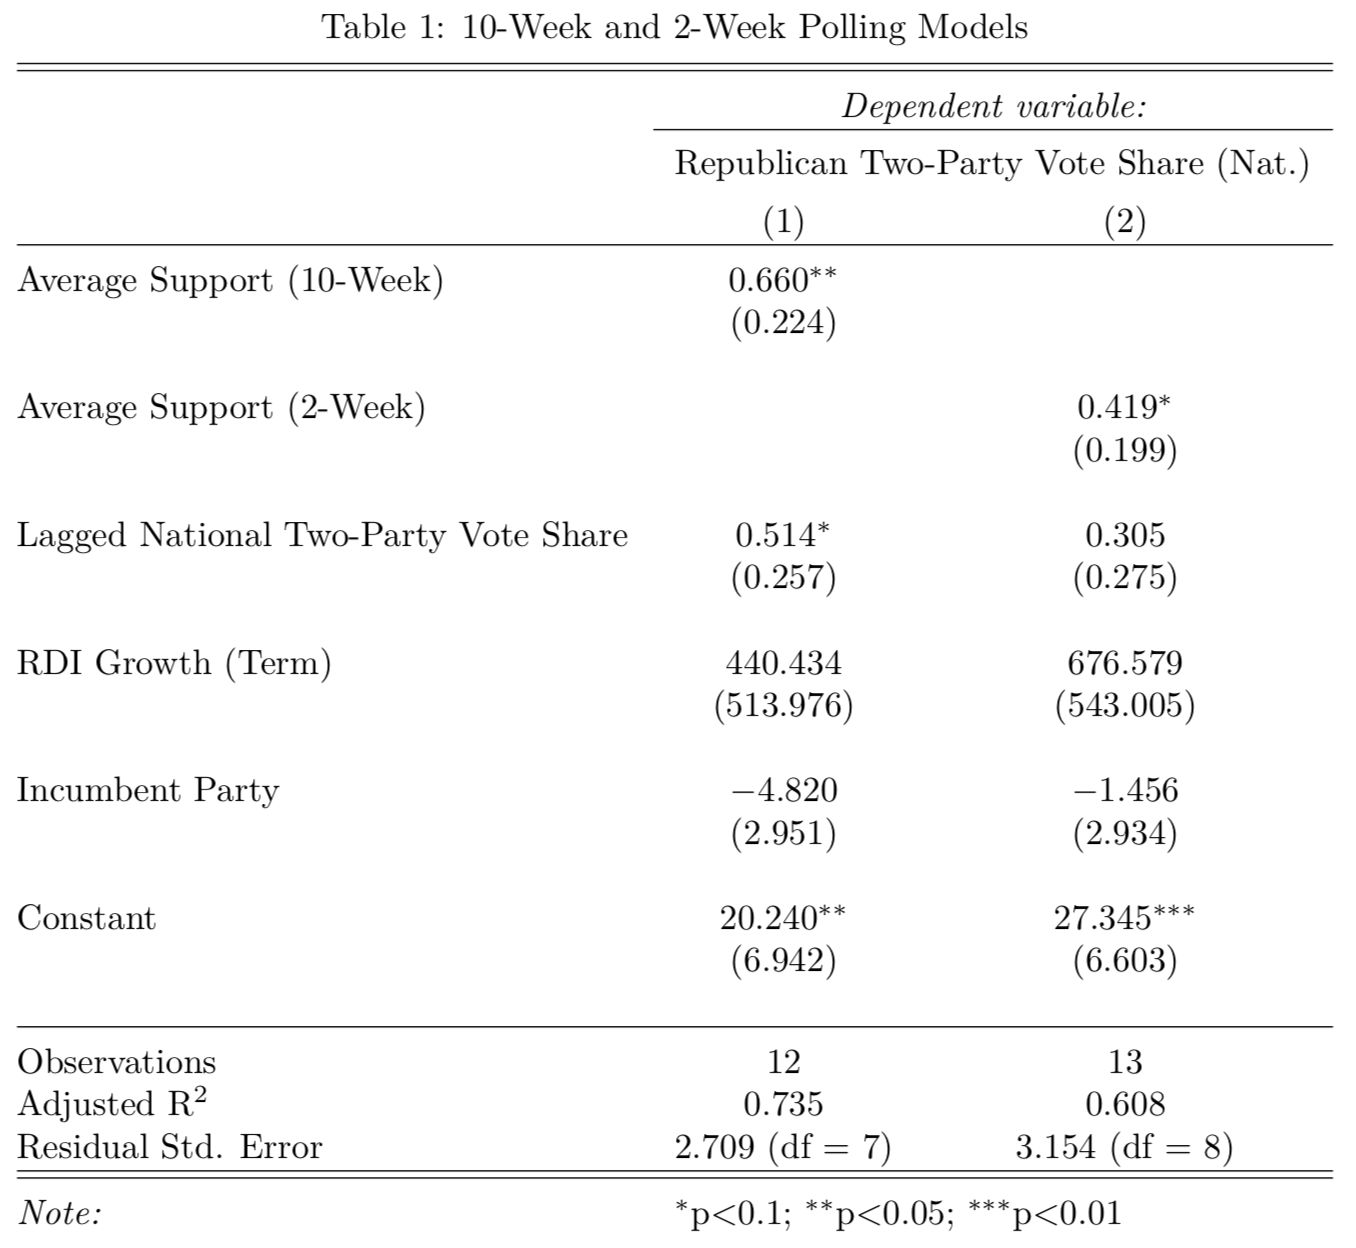 Ten-Week and Two-Week Polling Model Results